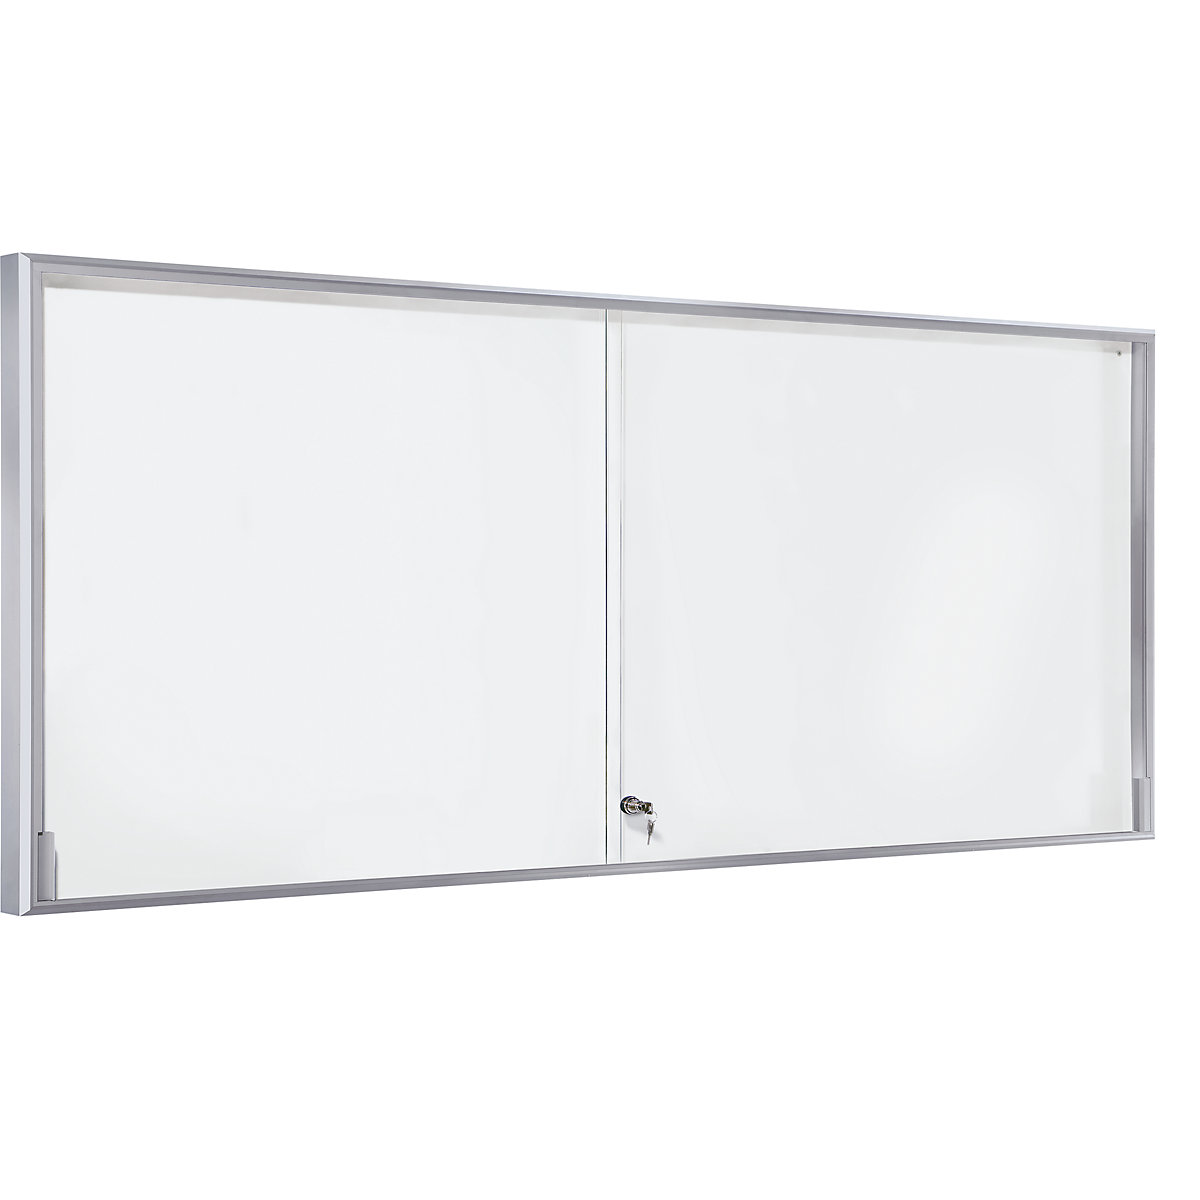 Display case, aluminium frame, sliding doors - eurokraft pro